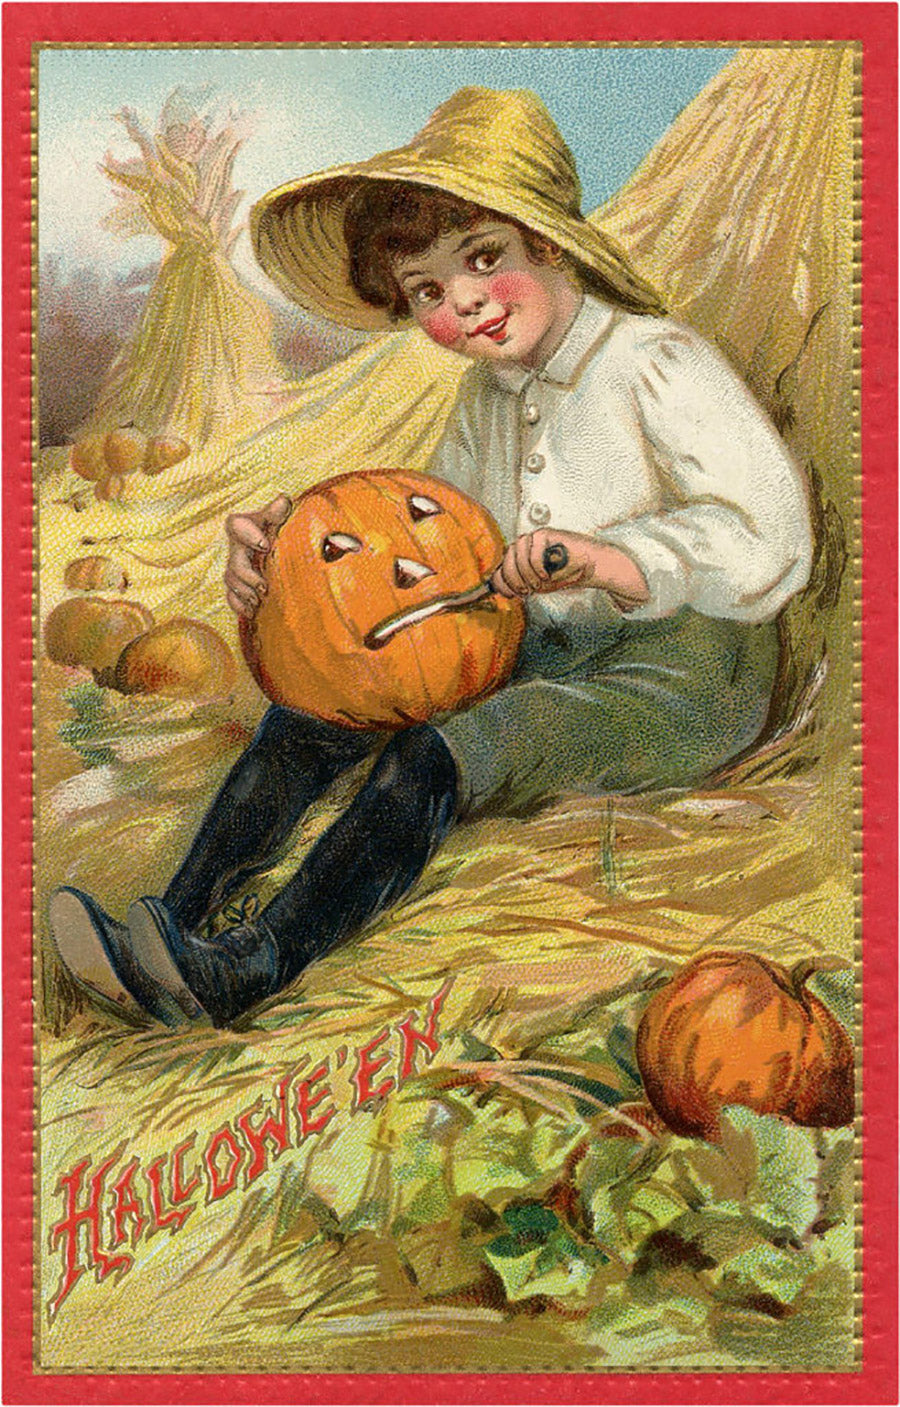 A boy carves a jack-o-lantern on an antique Halloween postcard